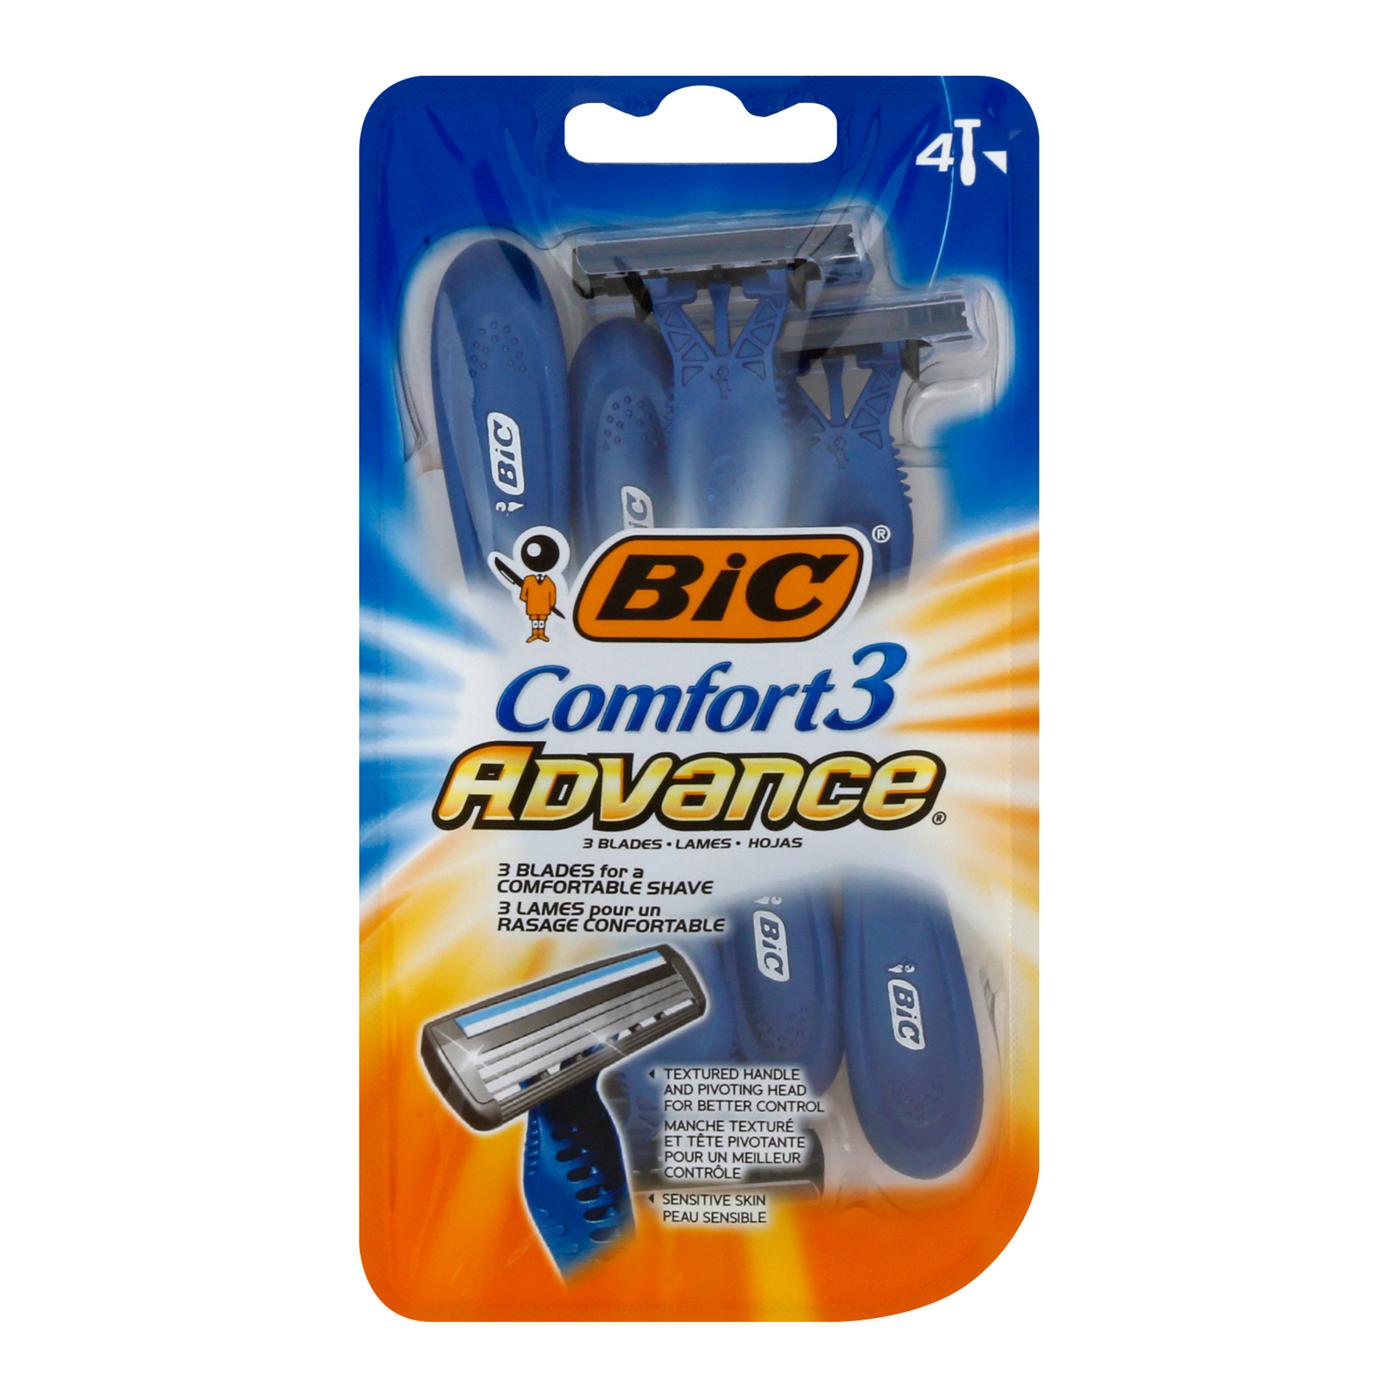 BIC Comfort 3 Advance Disposable Razor; image 1 of 2